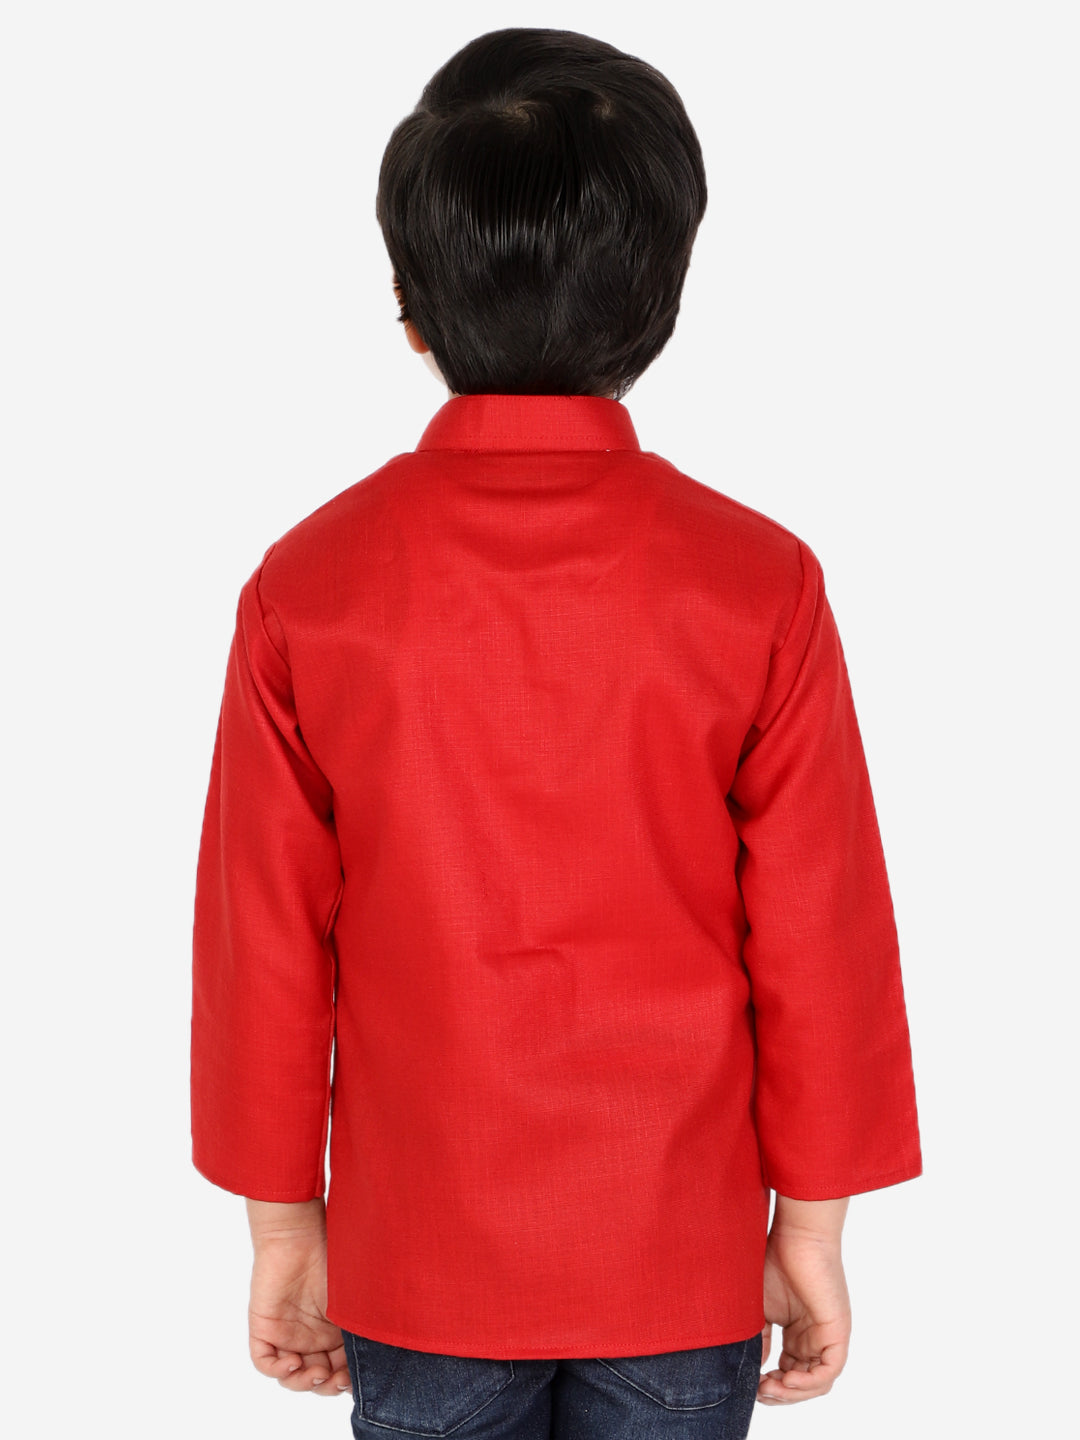 BownBee Full Sleeves Solid Short Kurta - Red